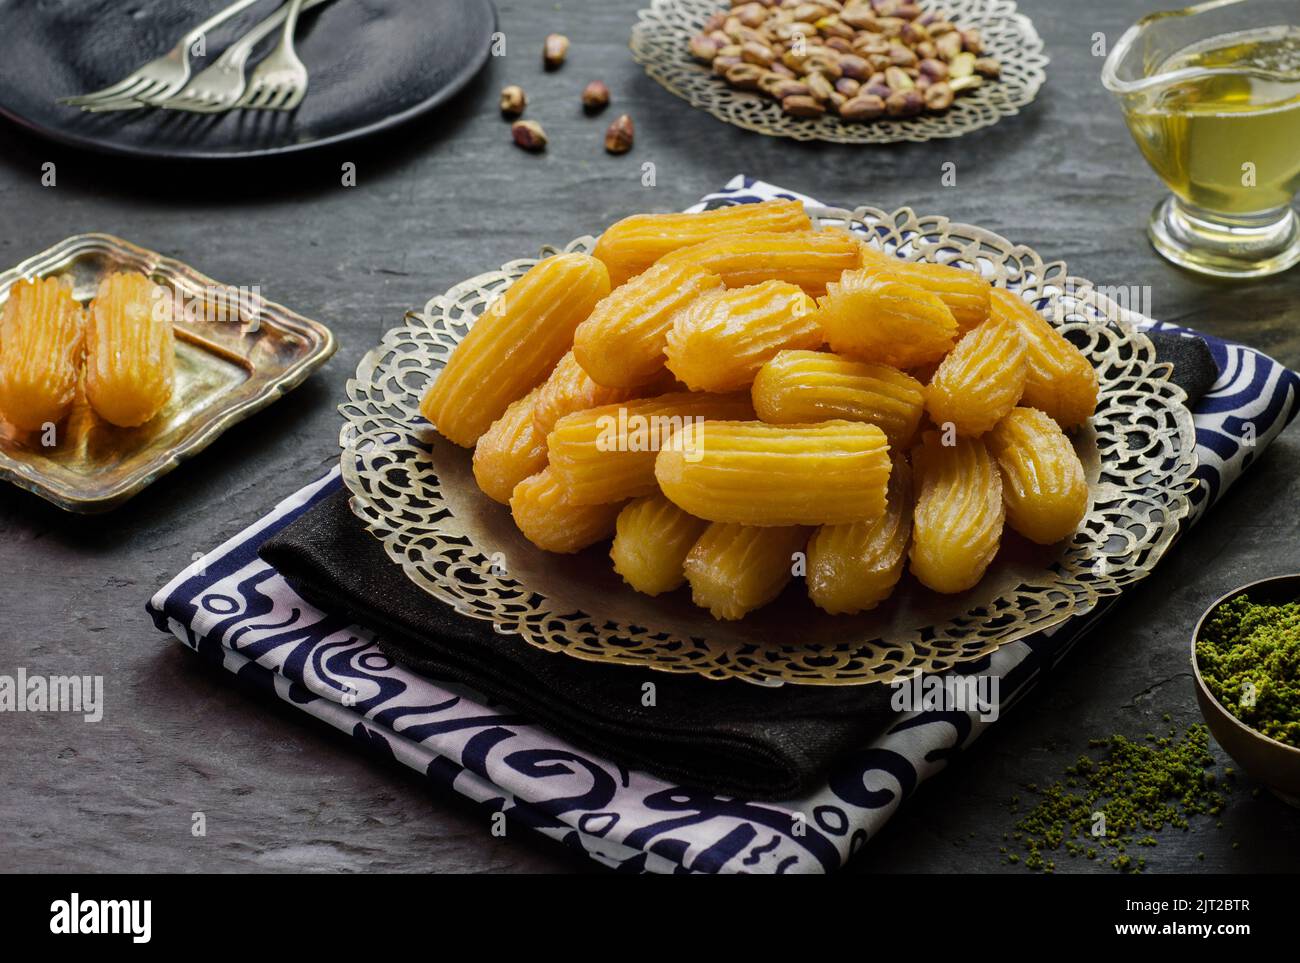 Arabic Cuisine: Middle Eastern Traditional dessert/Ramadan dessert Balah Al-Sham or Balah El Shaam served with pistachio and  honey syrup. Stock Photo